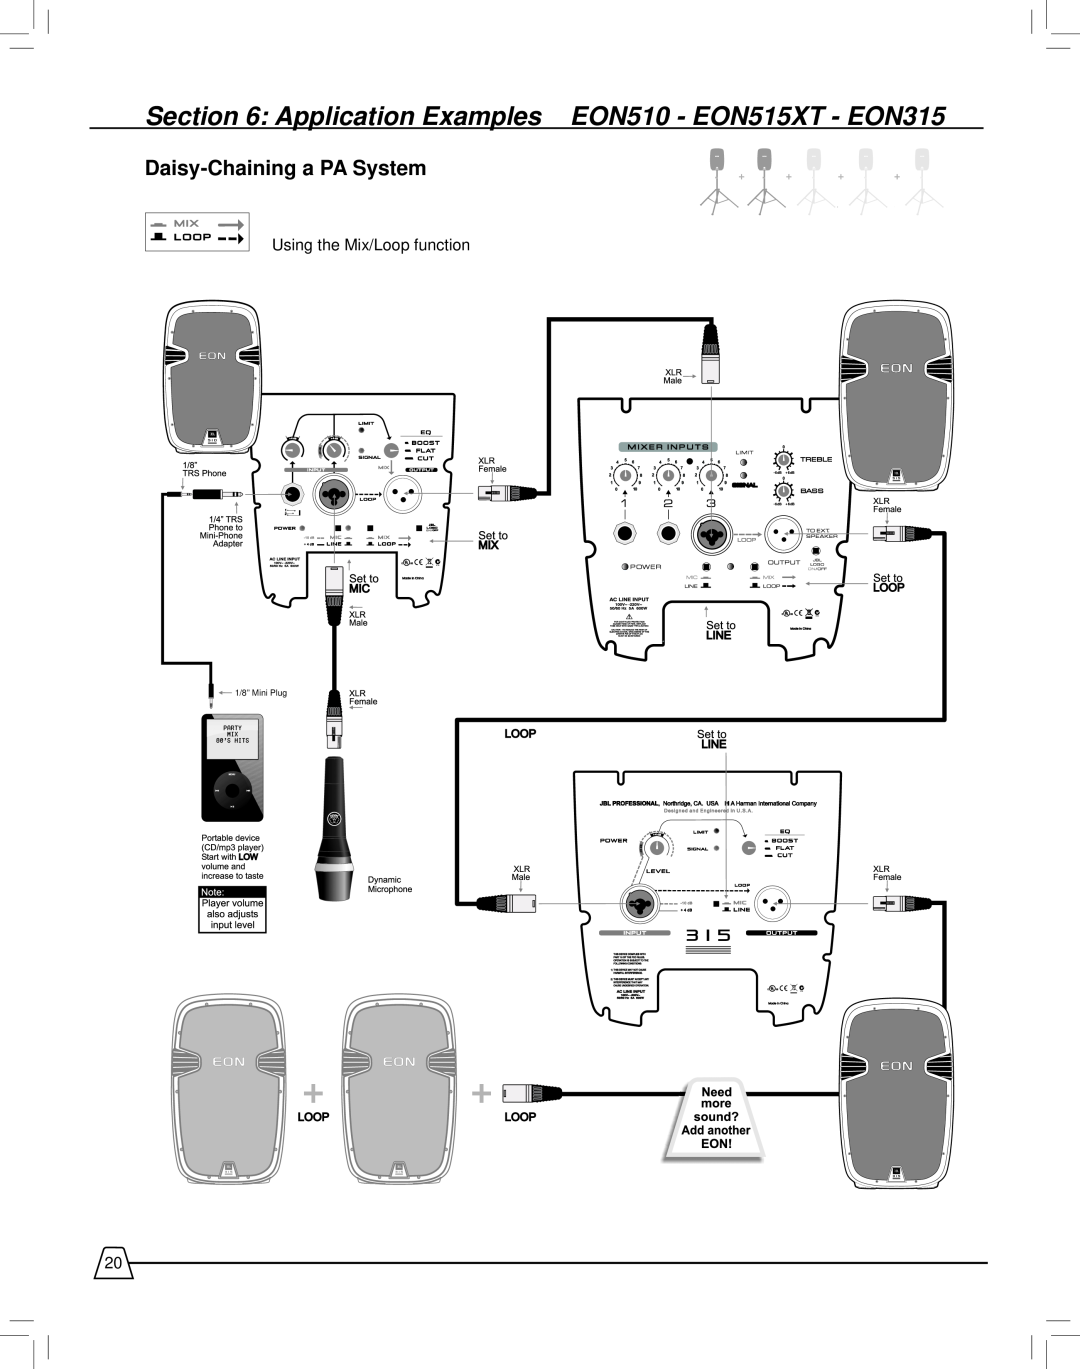 JBL EON515XT manual Daisy-Chaininga PA System, Using the Mix/Loop function, 1/8” Mini Plug 